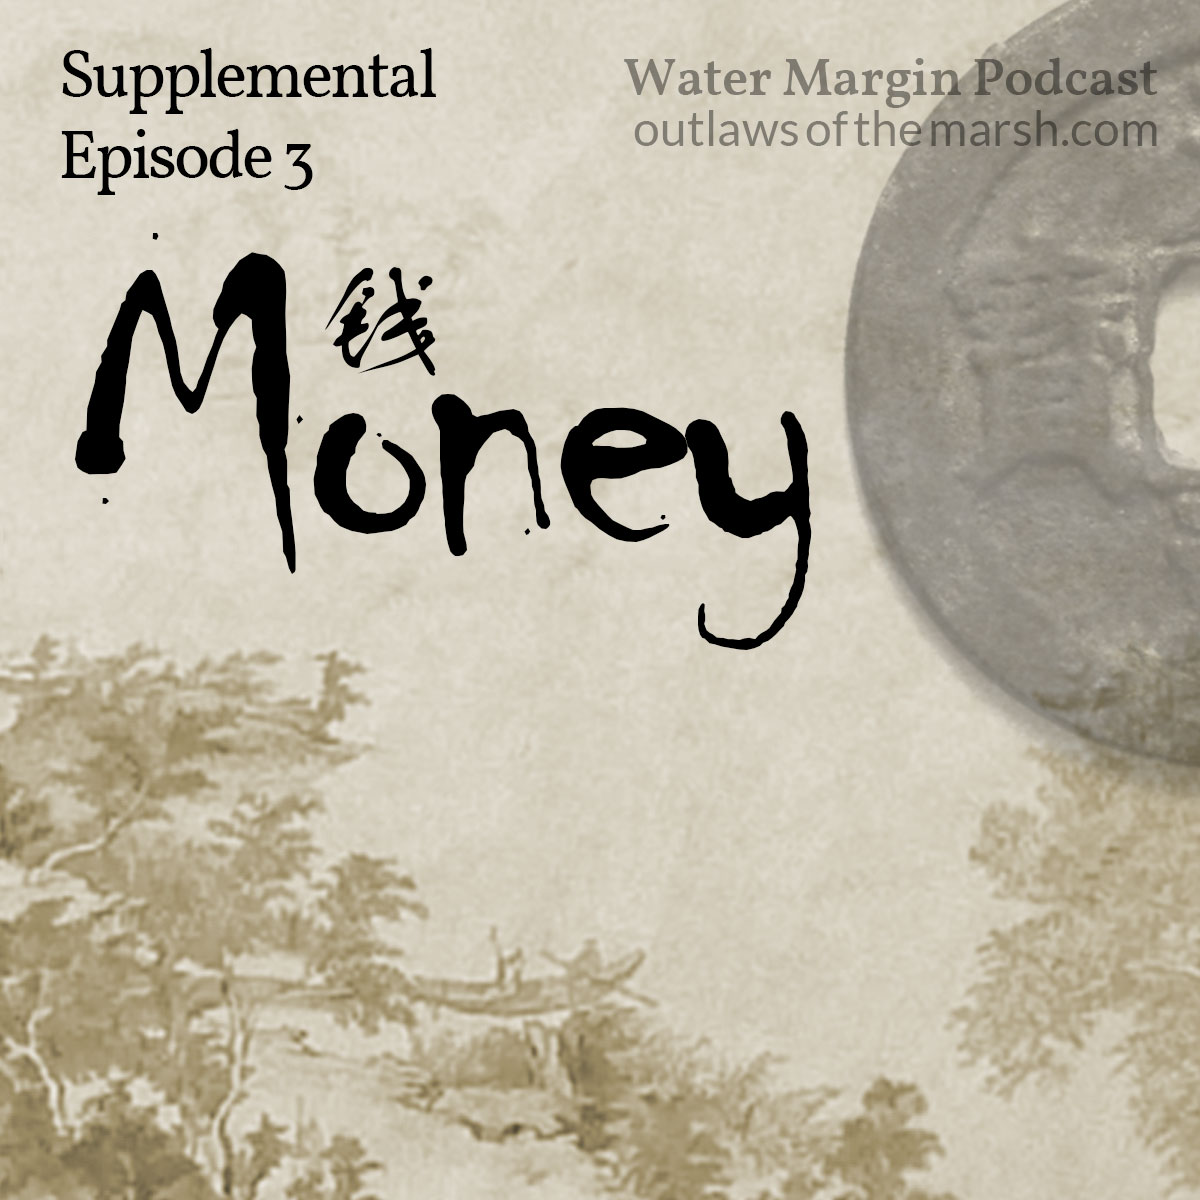 Water Margin Podcast: Episode 003